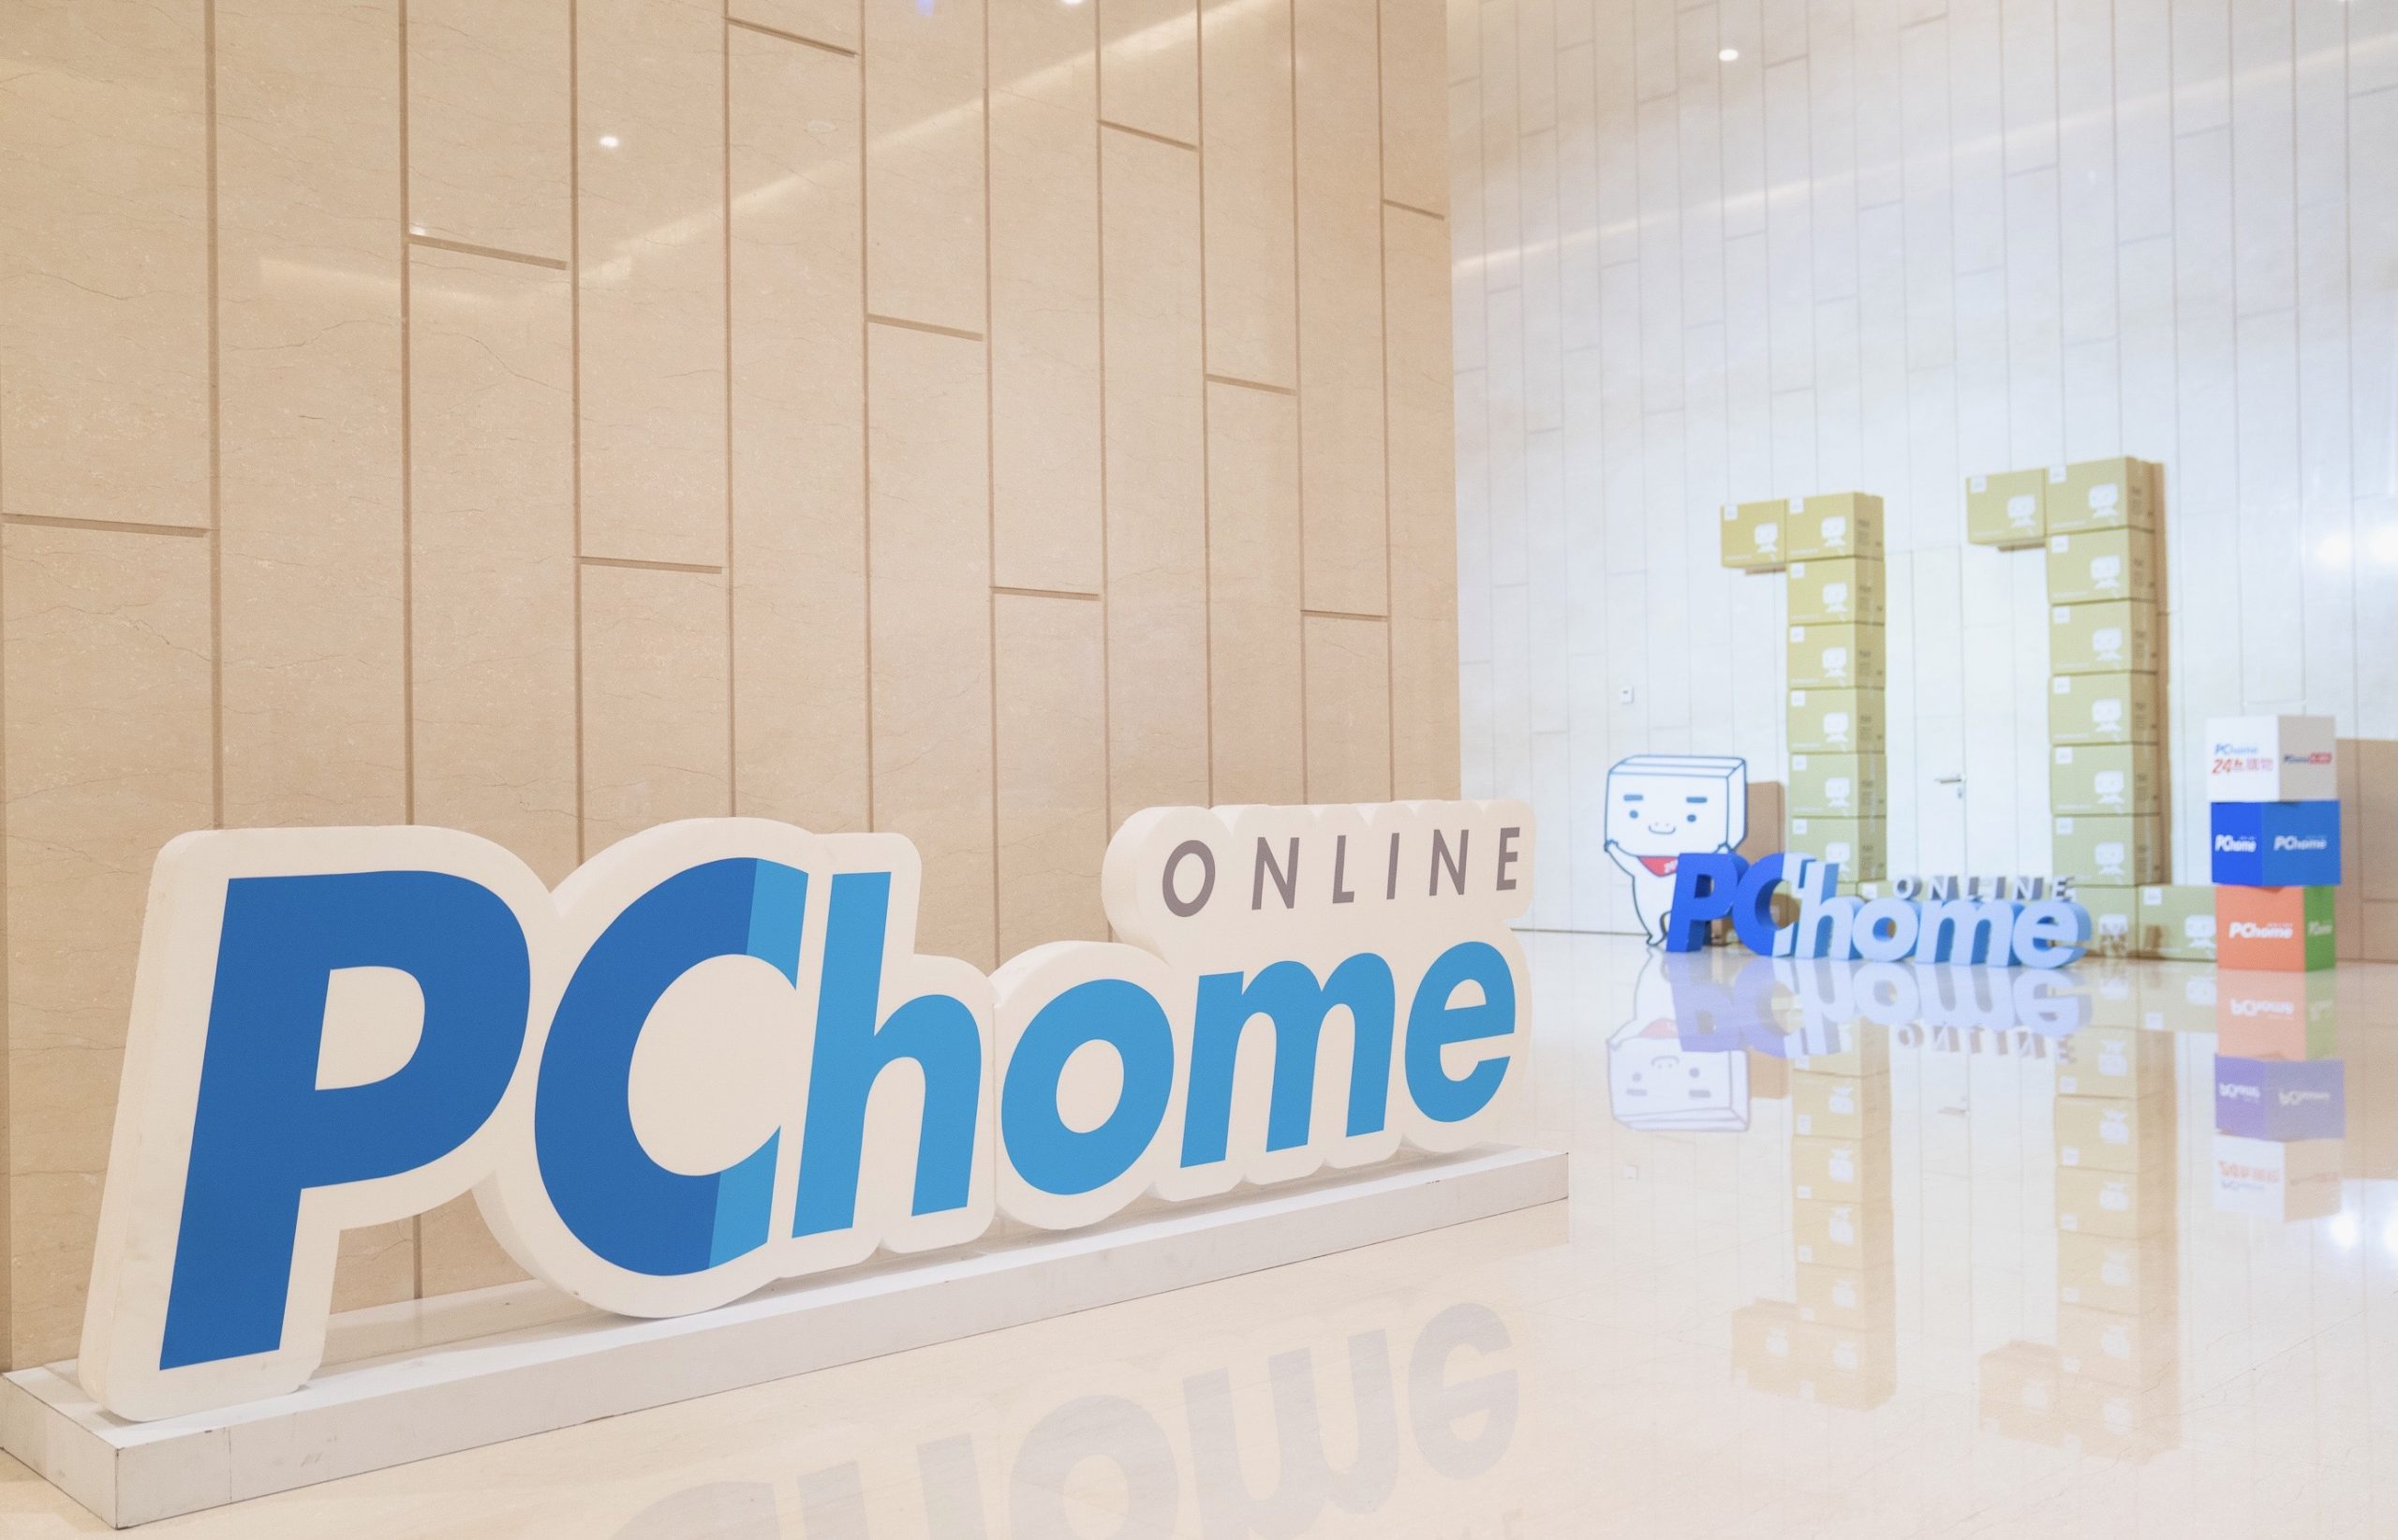 PChome網路家庭10月營收41.28億元 YOY增31.06% 樂觀展望年底傳統零售旺季 加大多元行銷力道 迎來最熱雙11